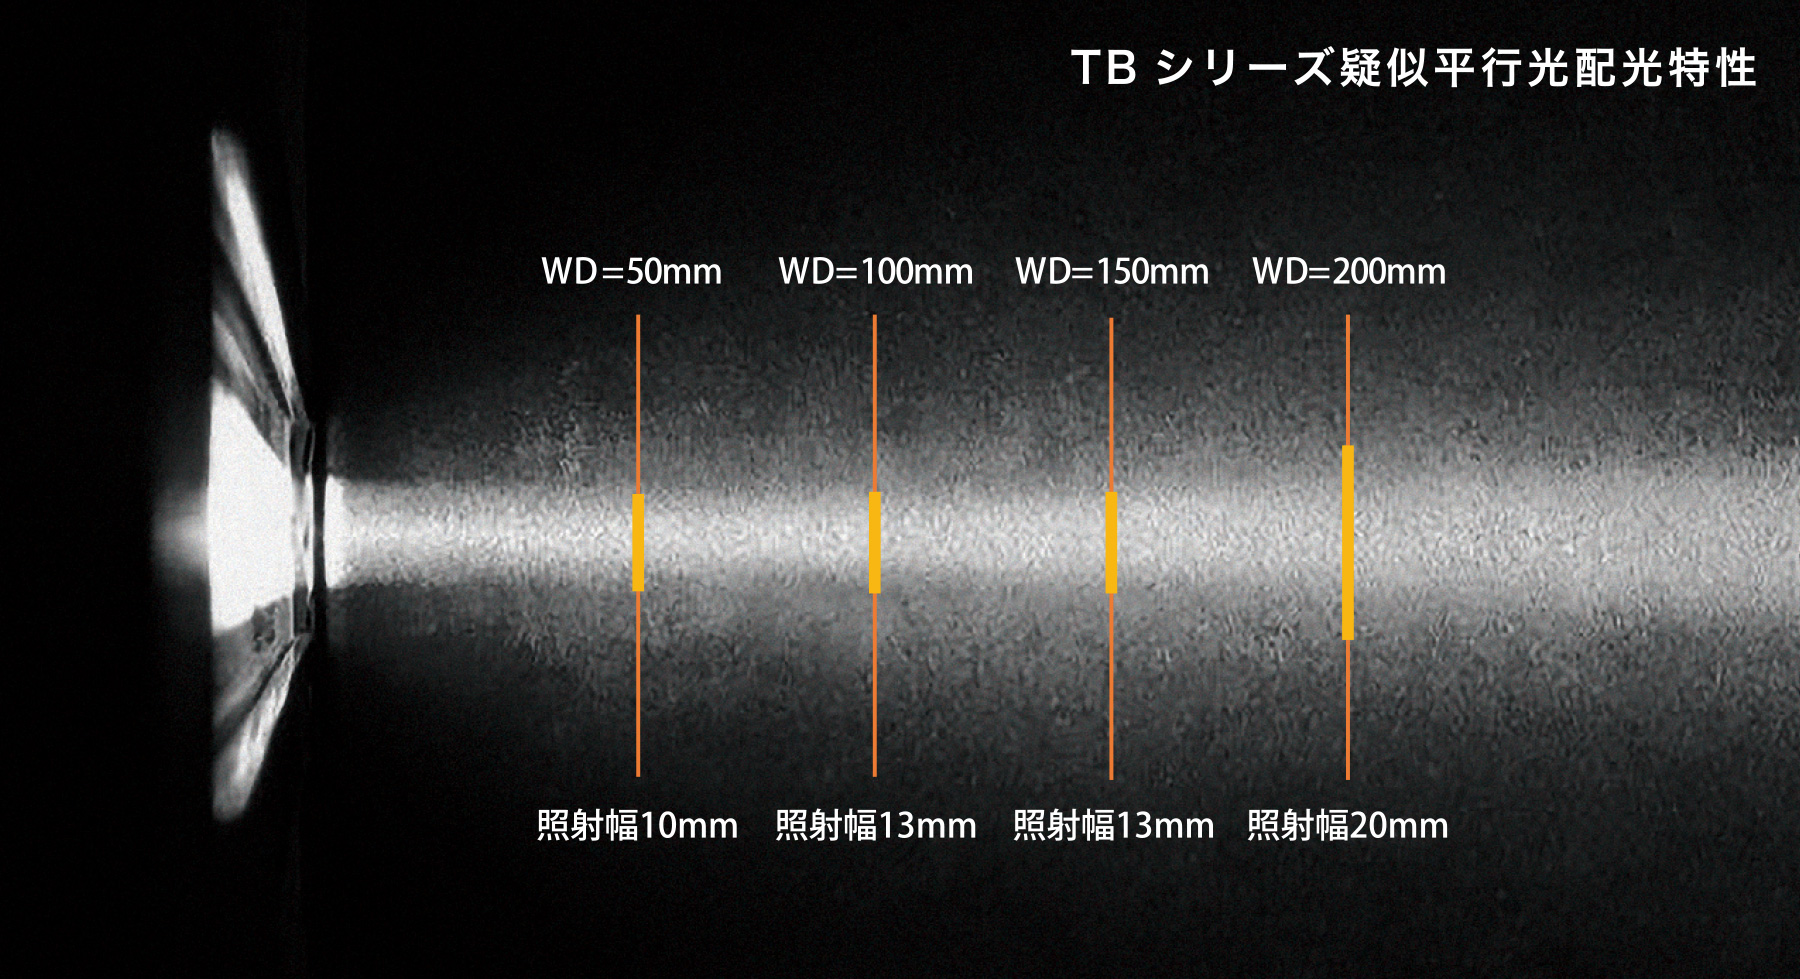 SPX-TB / 07/30/70 考虑平行光的光学设计 伪平行光分布可提高长距离照度